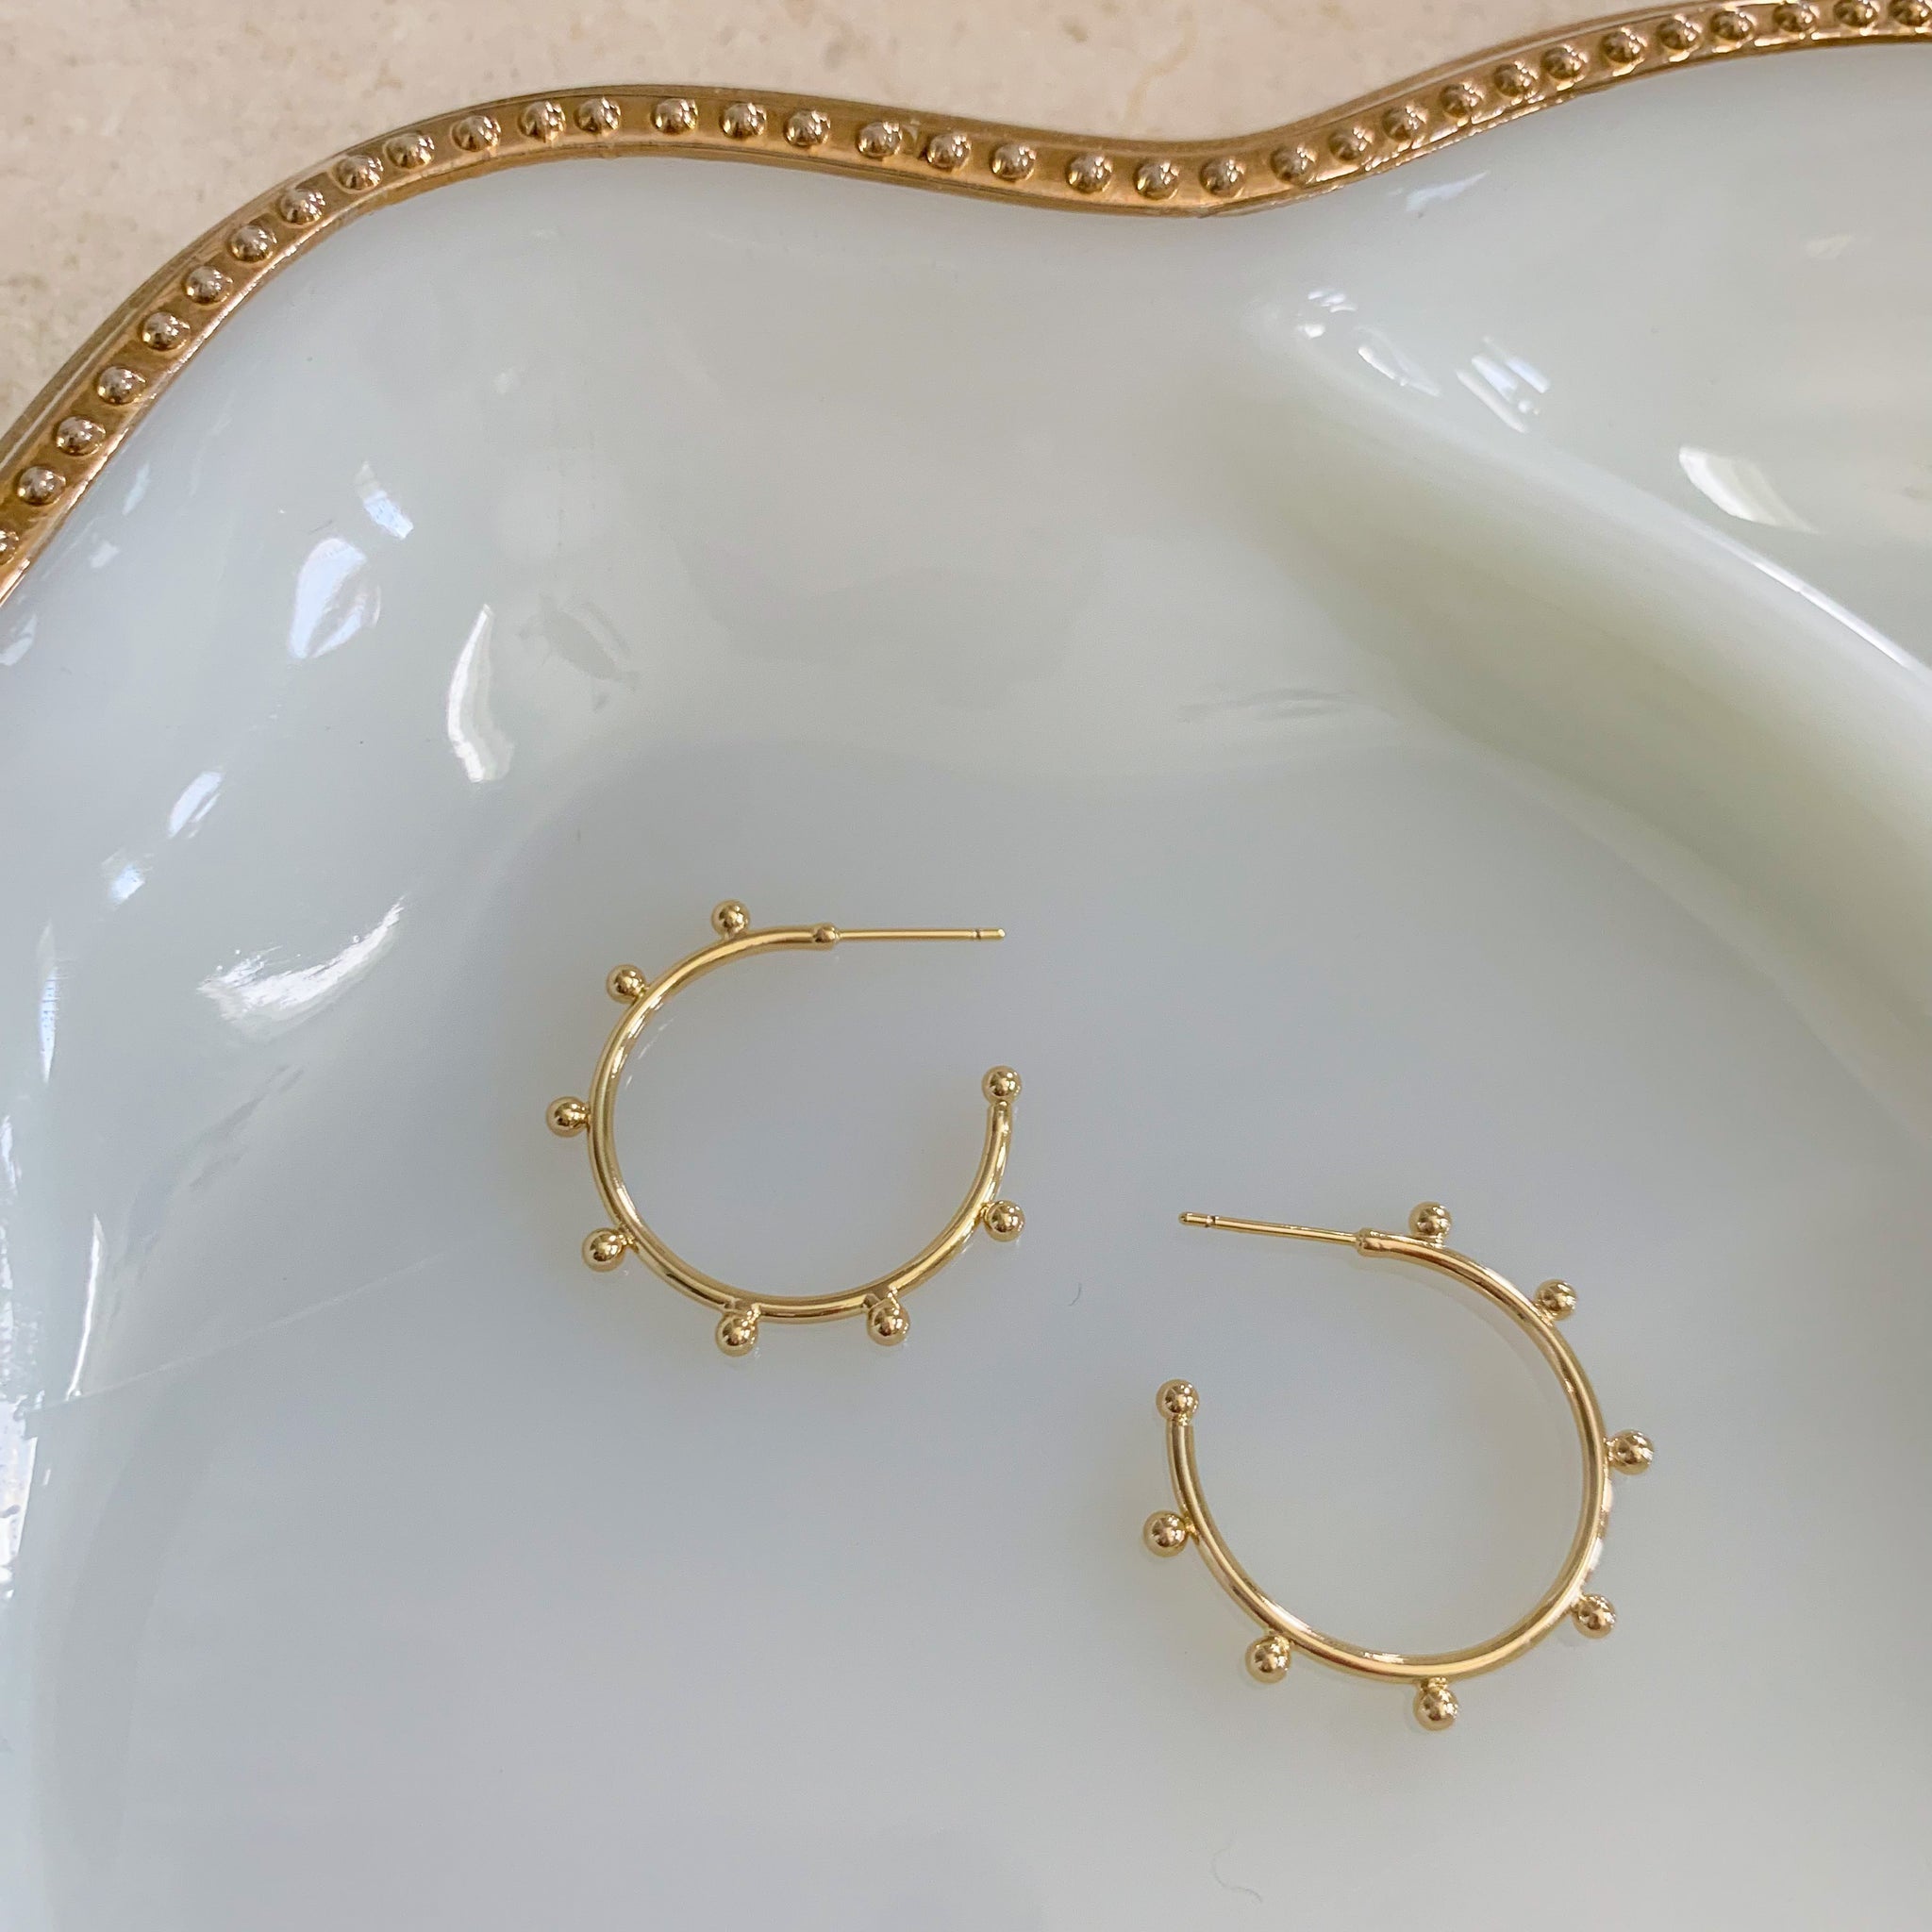 High Quality Gold Plated Men's 925 Sterling Silver Solid Huggie Hoop  Earrings | eBay